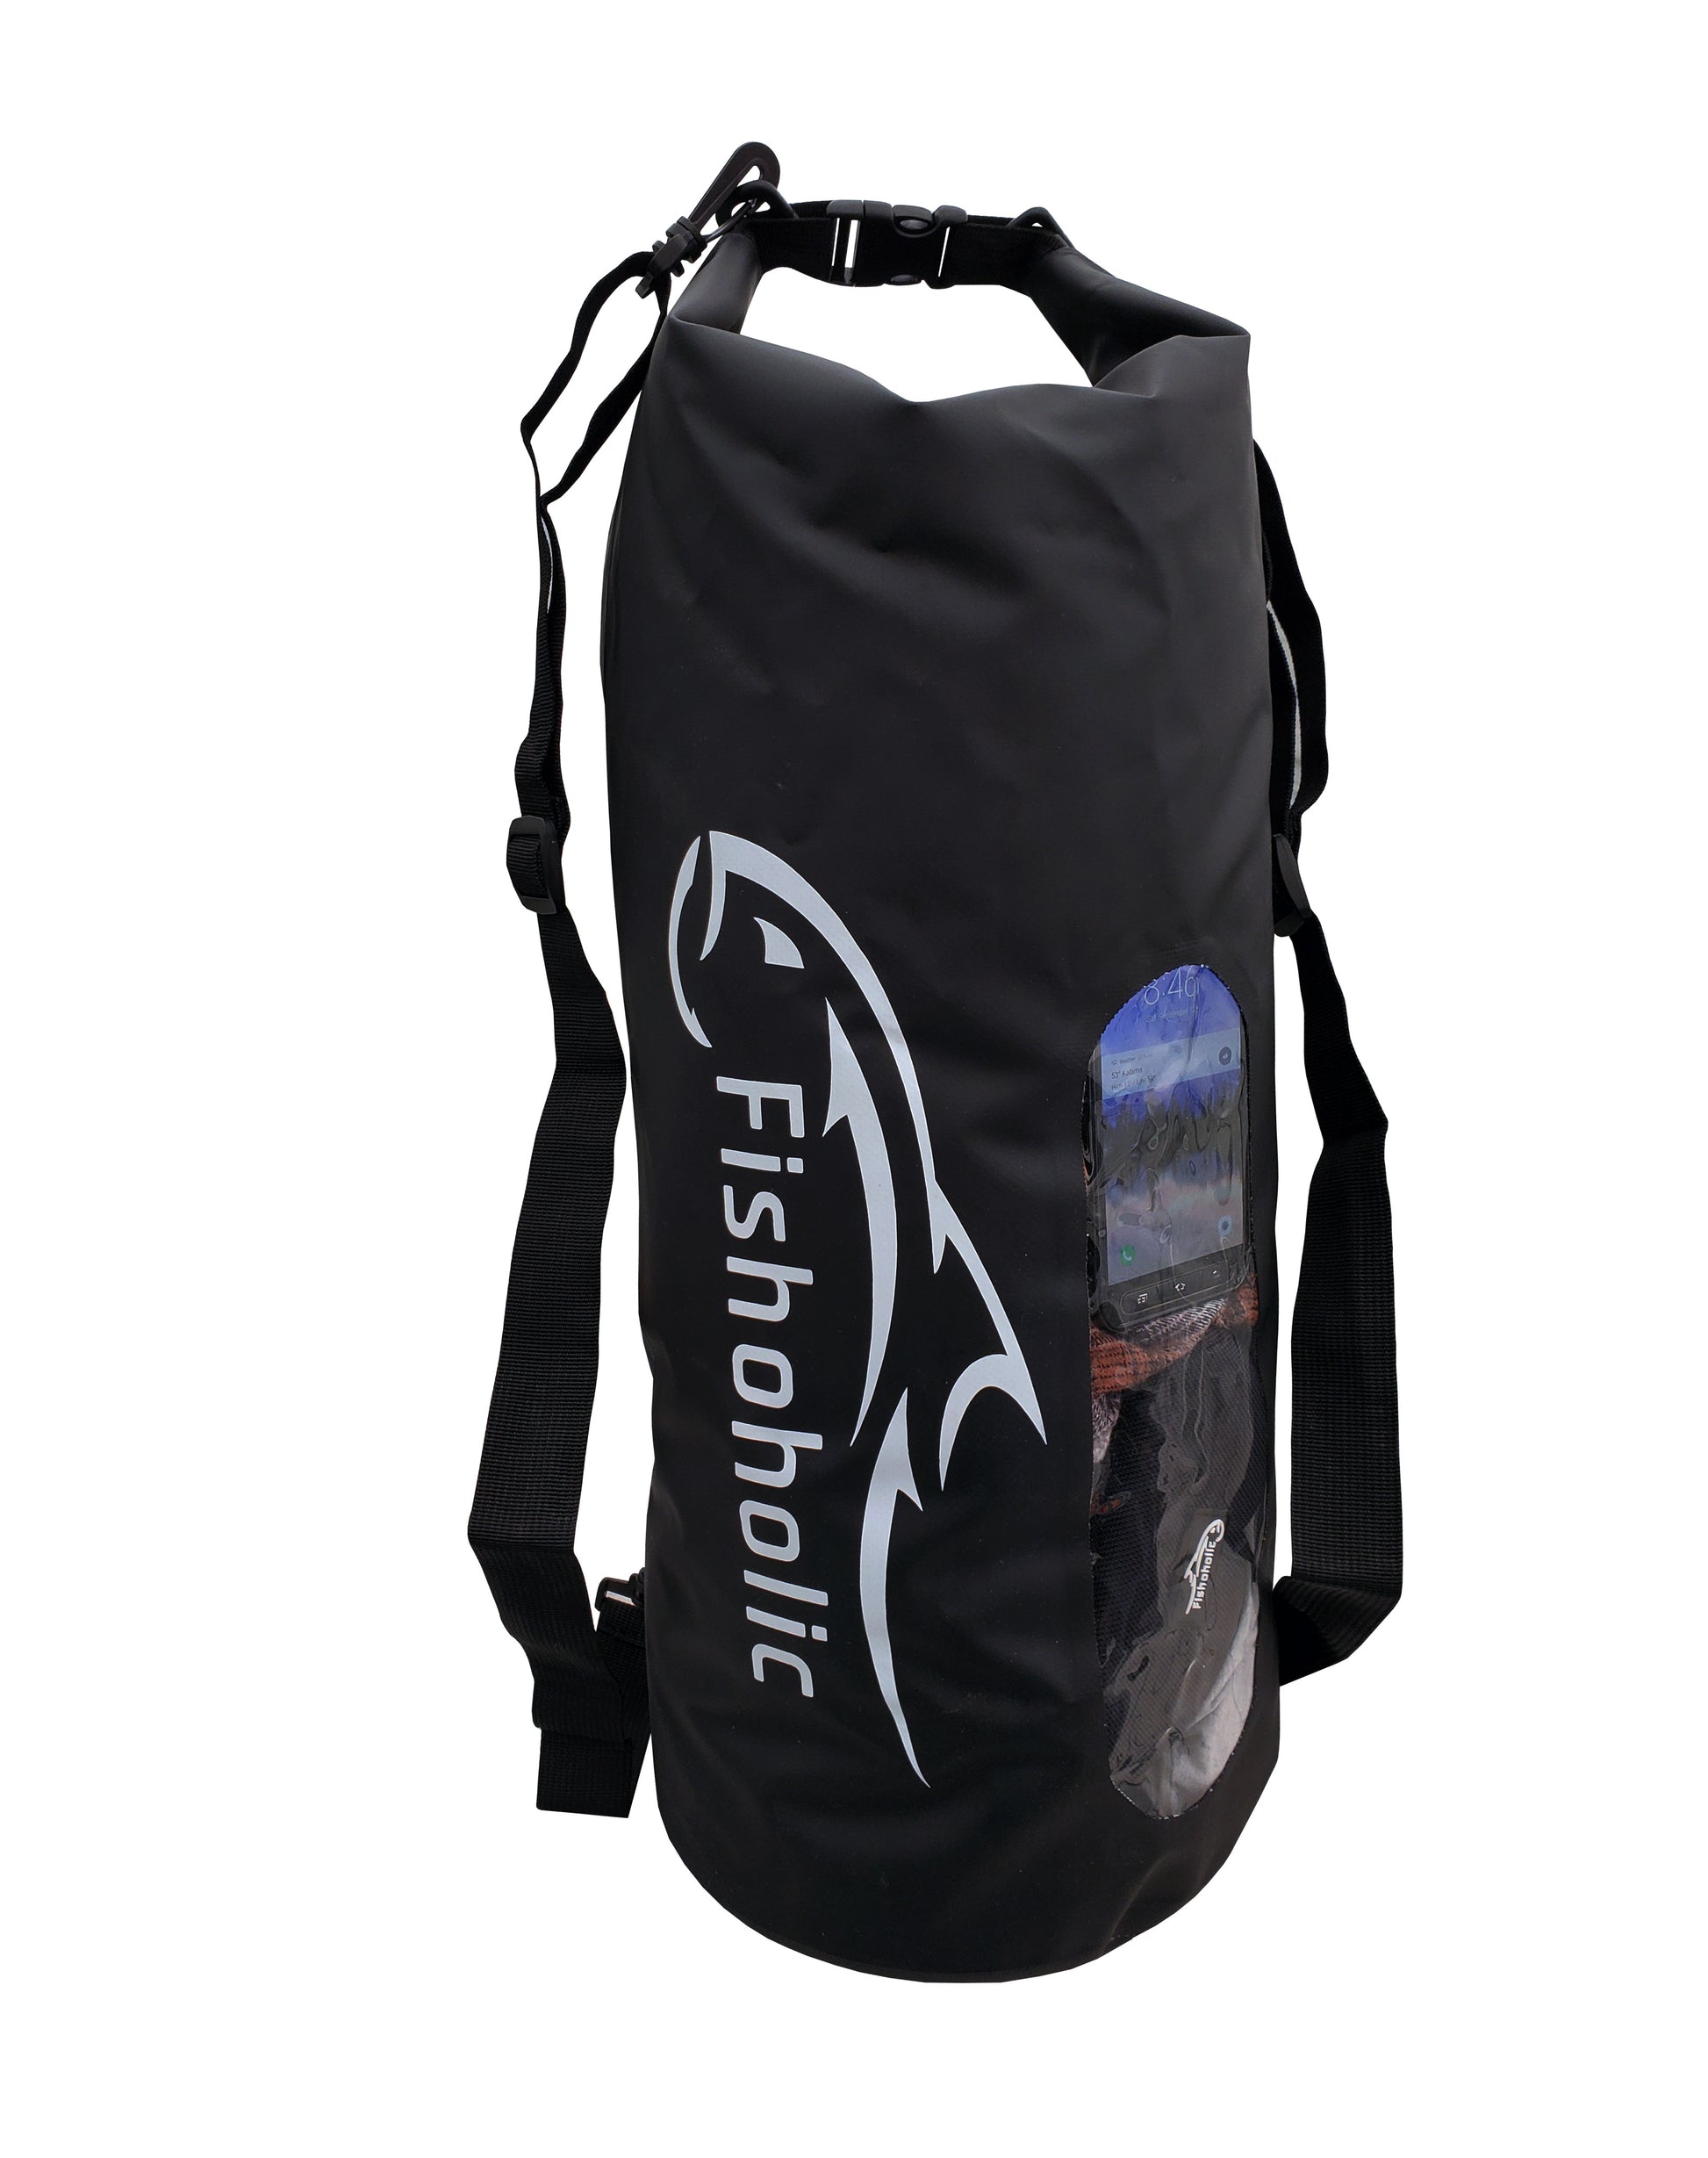 Fishoholic 30L Dry Bag - Clear Window Waterproof Gear Bags - Fail-Safe Snap  - Tough & Durable